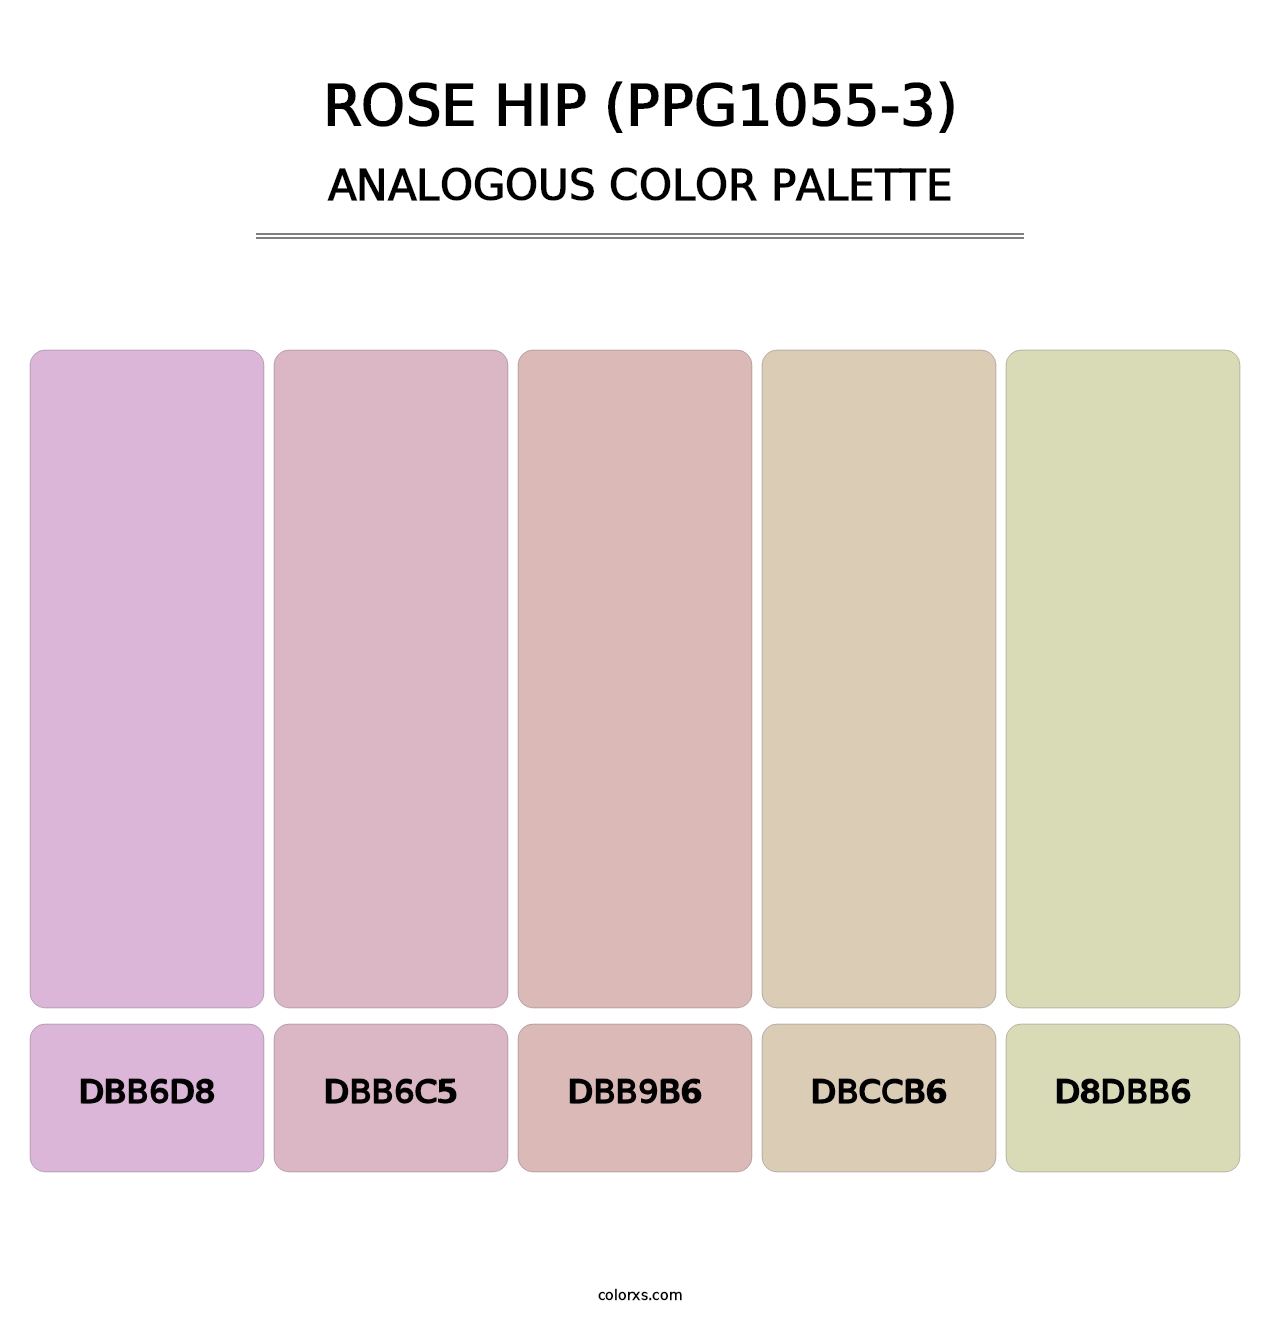 Rose Hip (PPG1055-3) - Analogous Color Palette